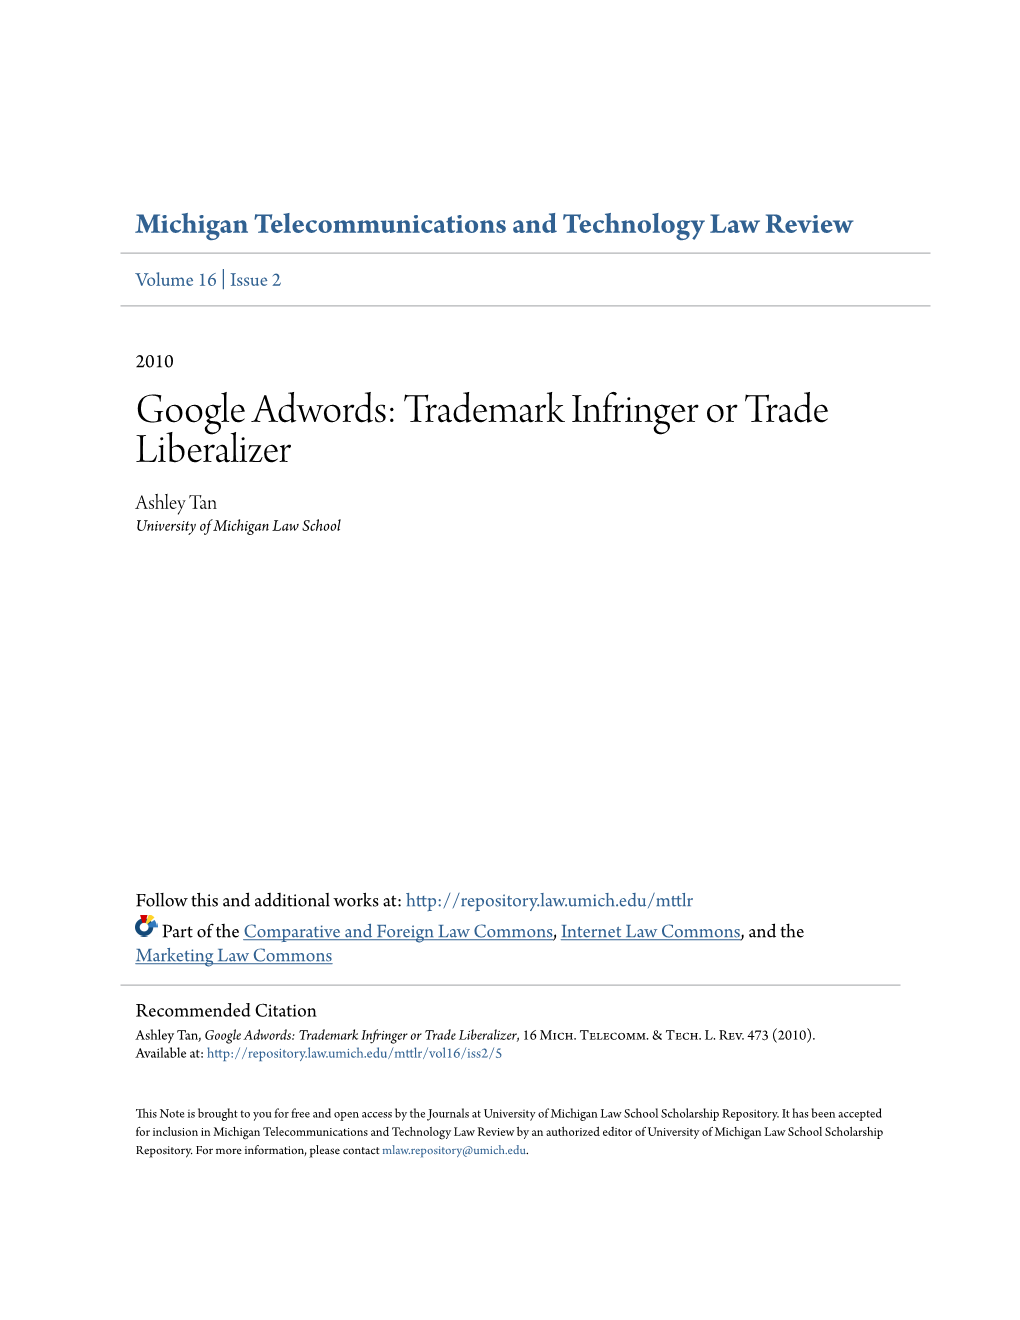 Google Adwords: Trademark Infringer Or Trade Liberalizer Ashley Tan University of Michigan Law School